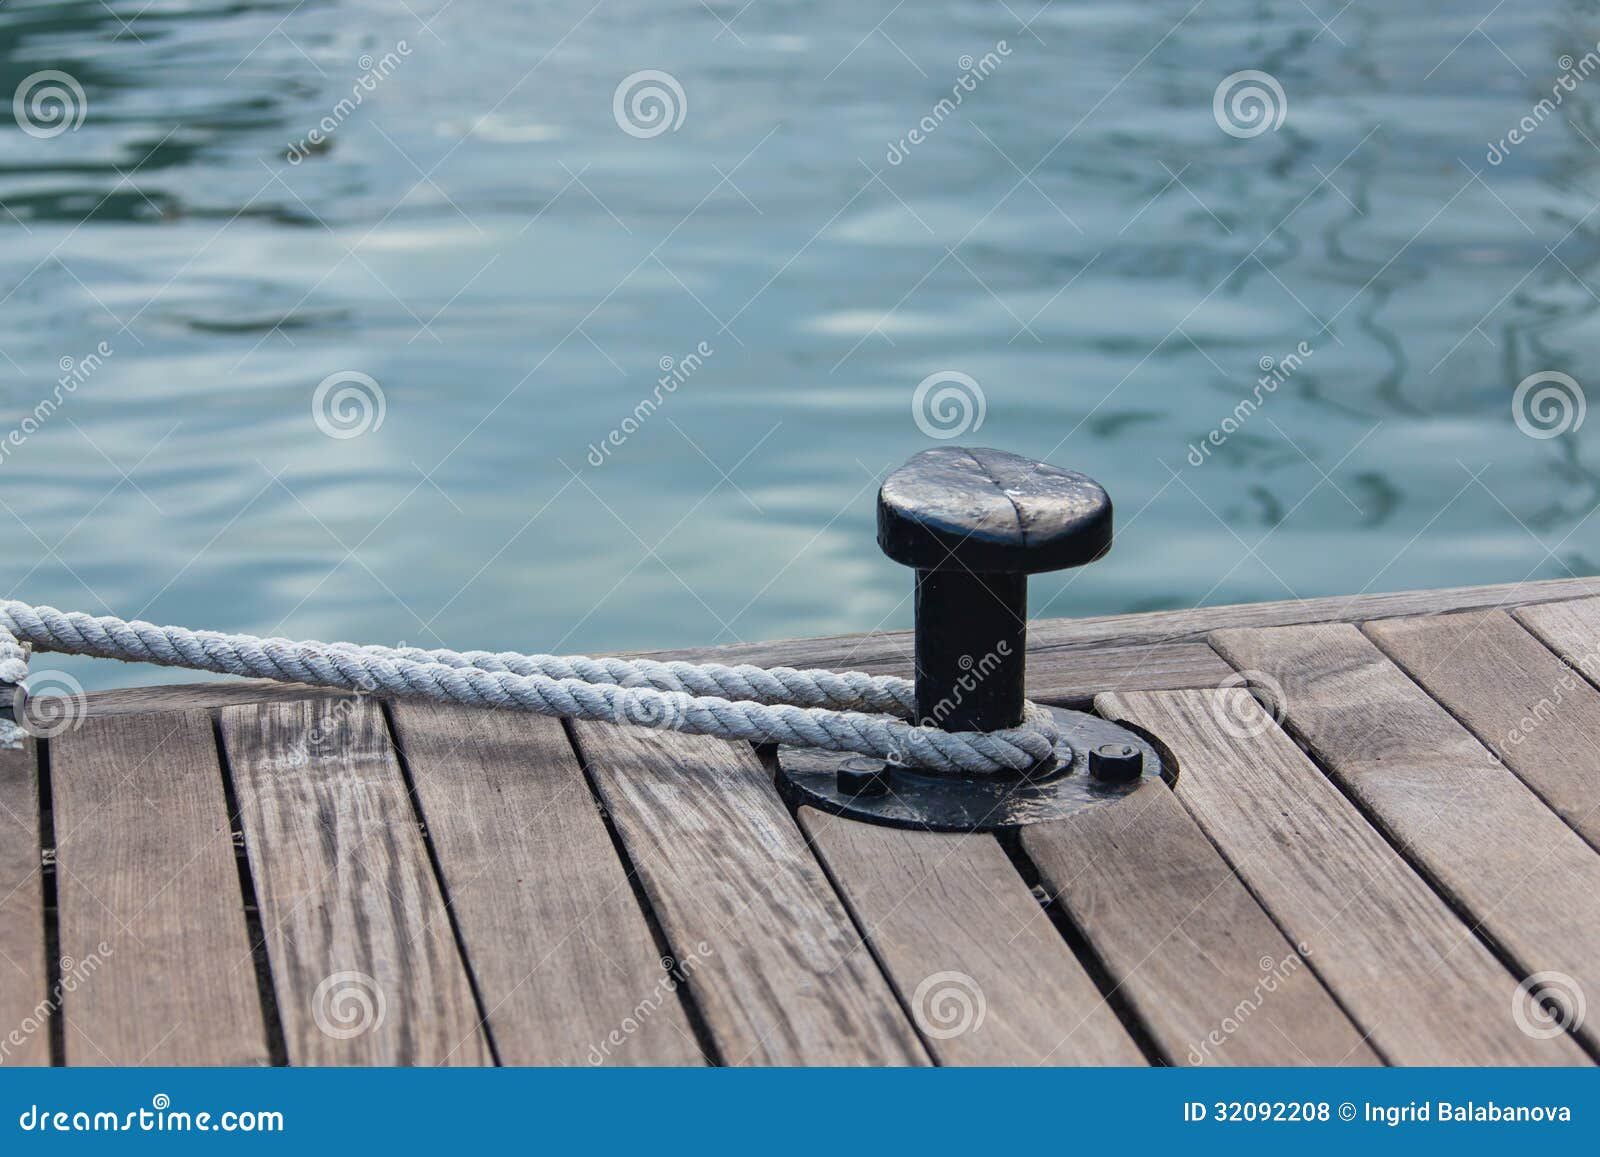 mooring rope tied around steel anchor